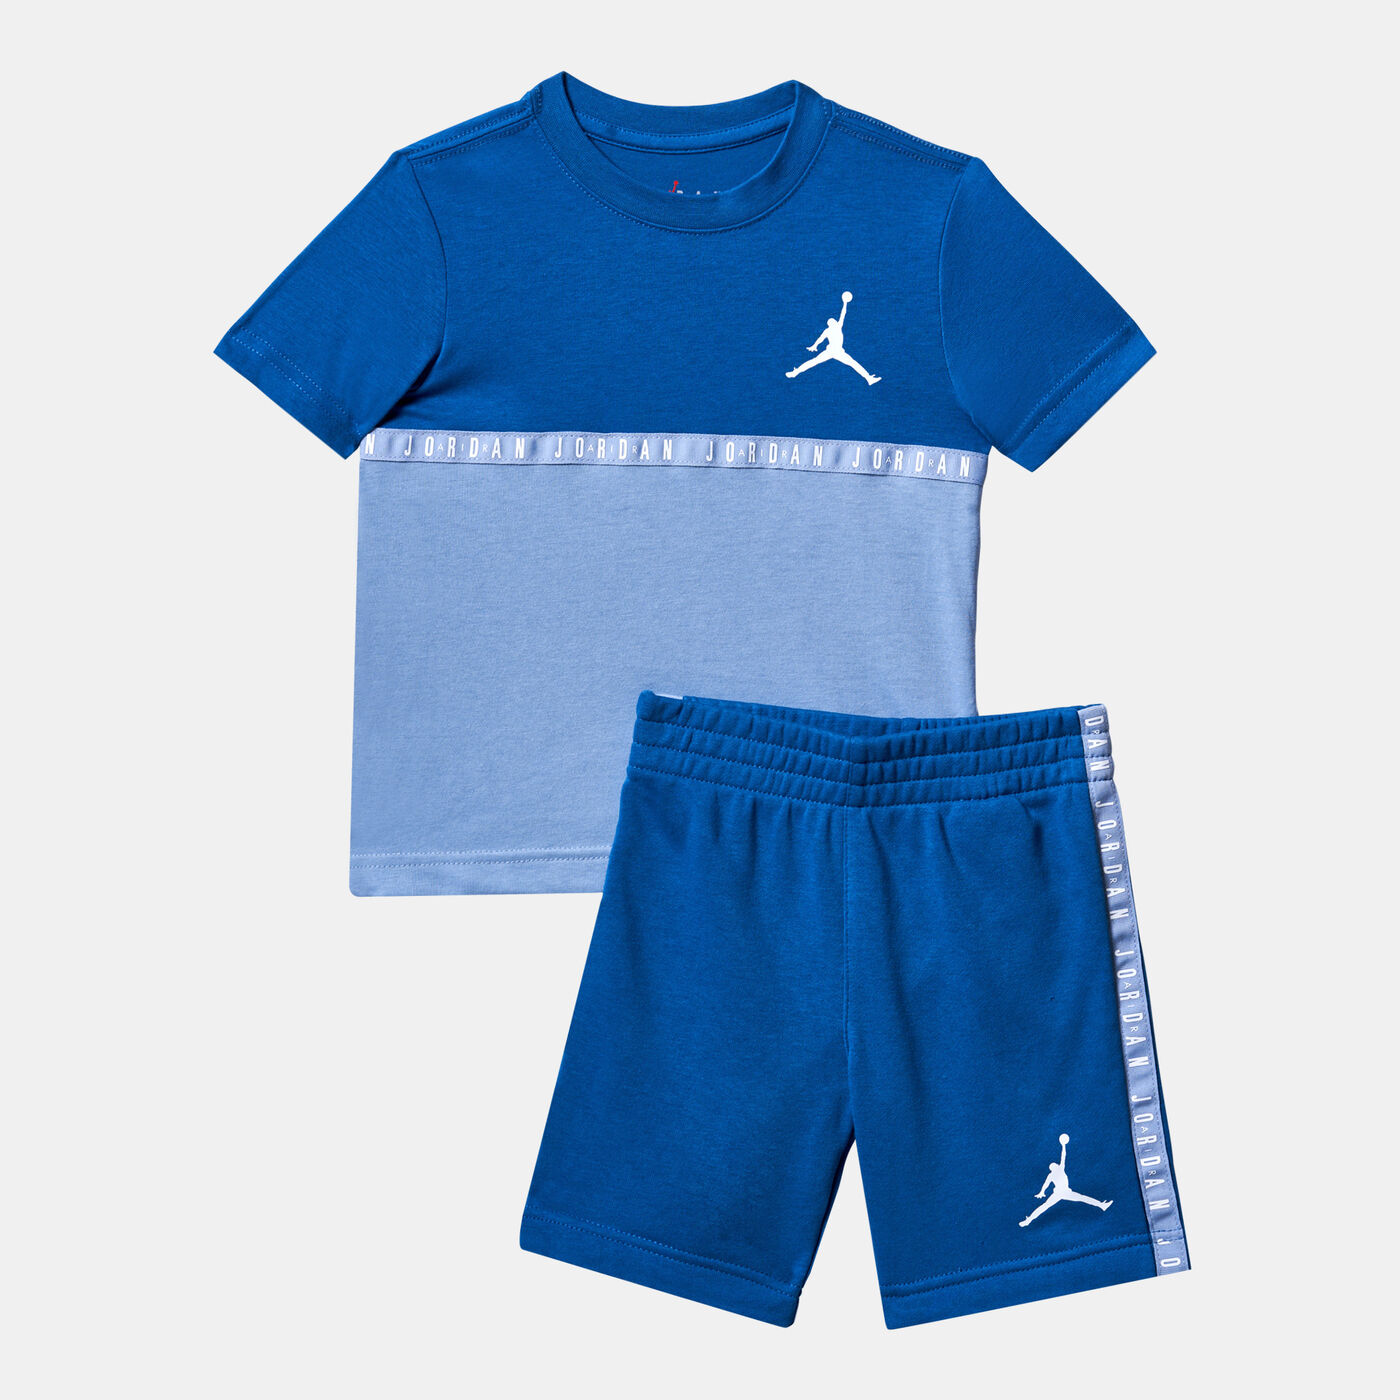 Kids' Jumpman Blocked Taping T-Shirt and Shorts Set (Baby and Toddler)